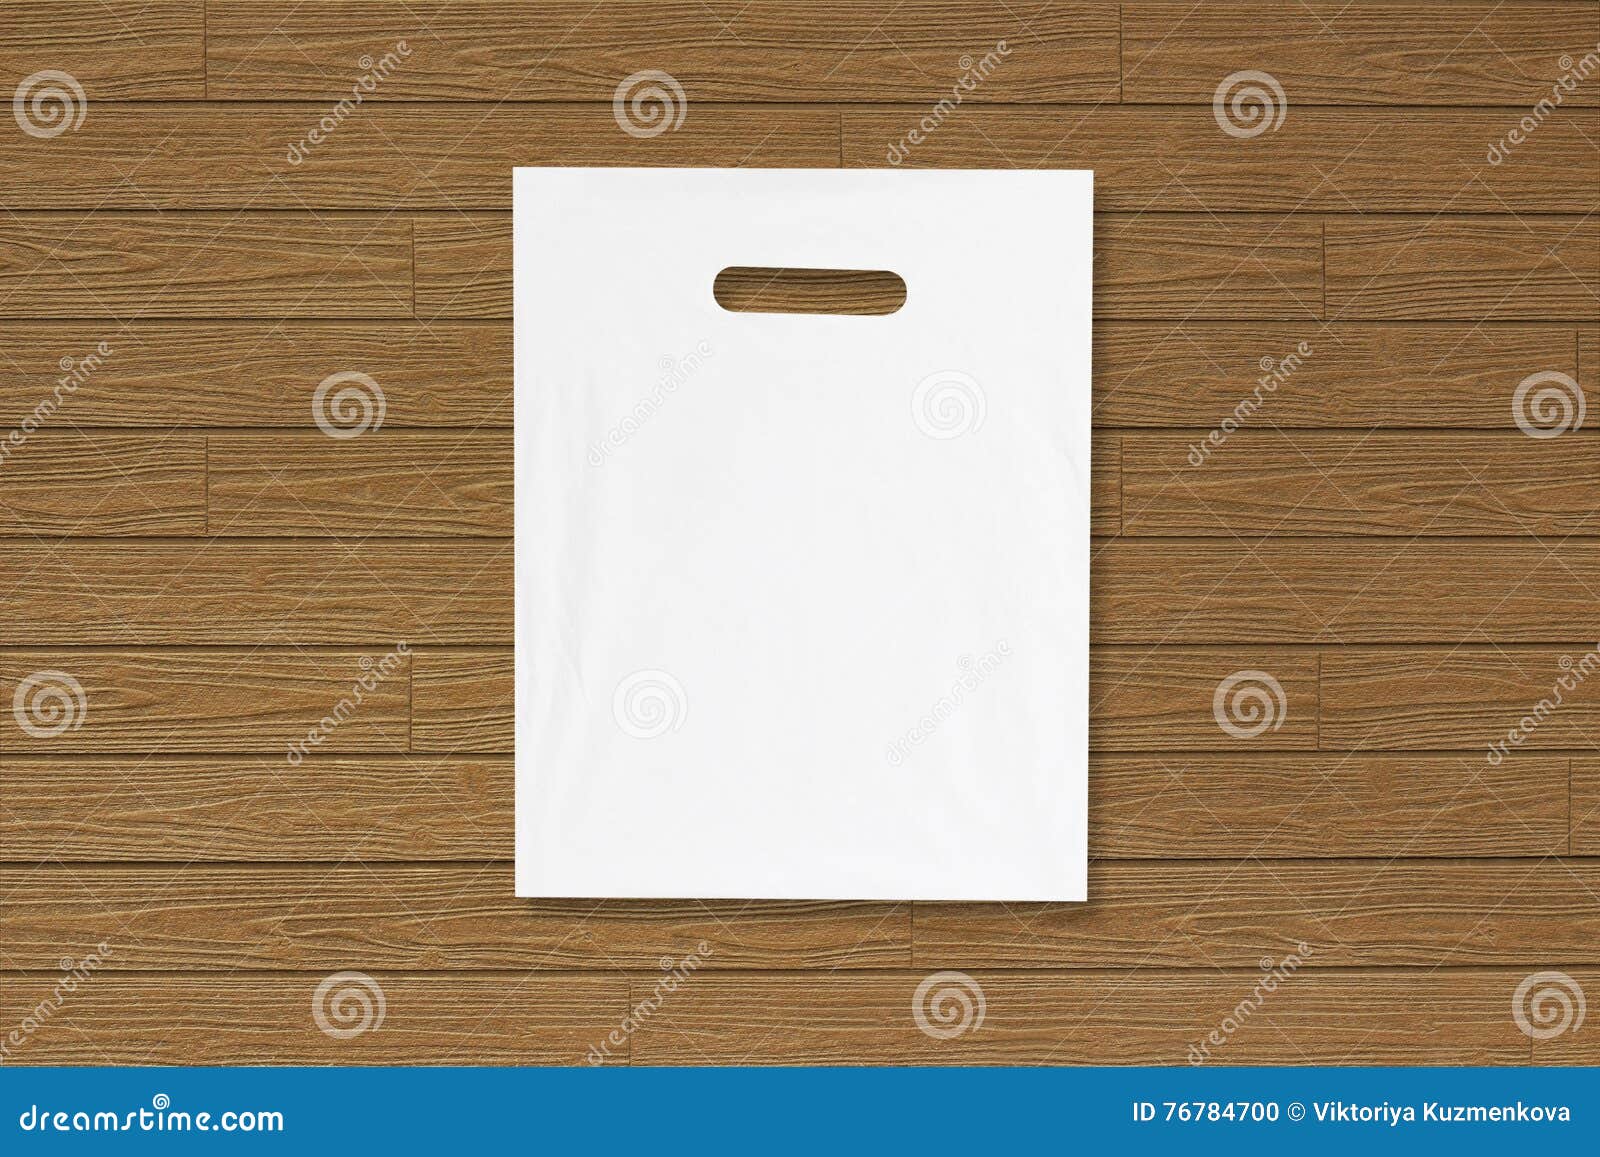 Download Blank Plastic Bag Mock Up On Wooden Floor. Empty White ...